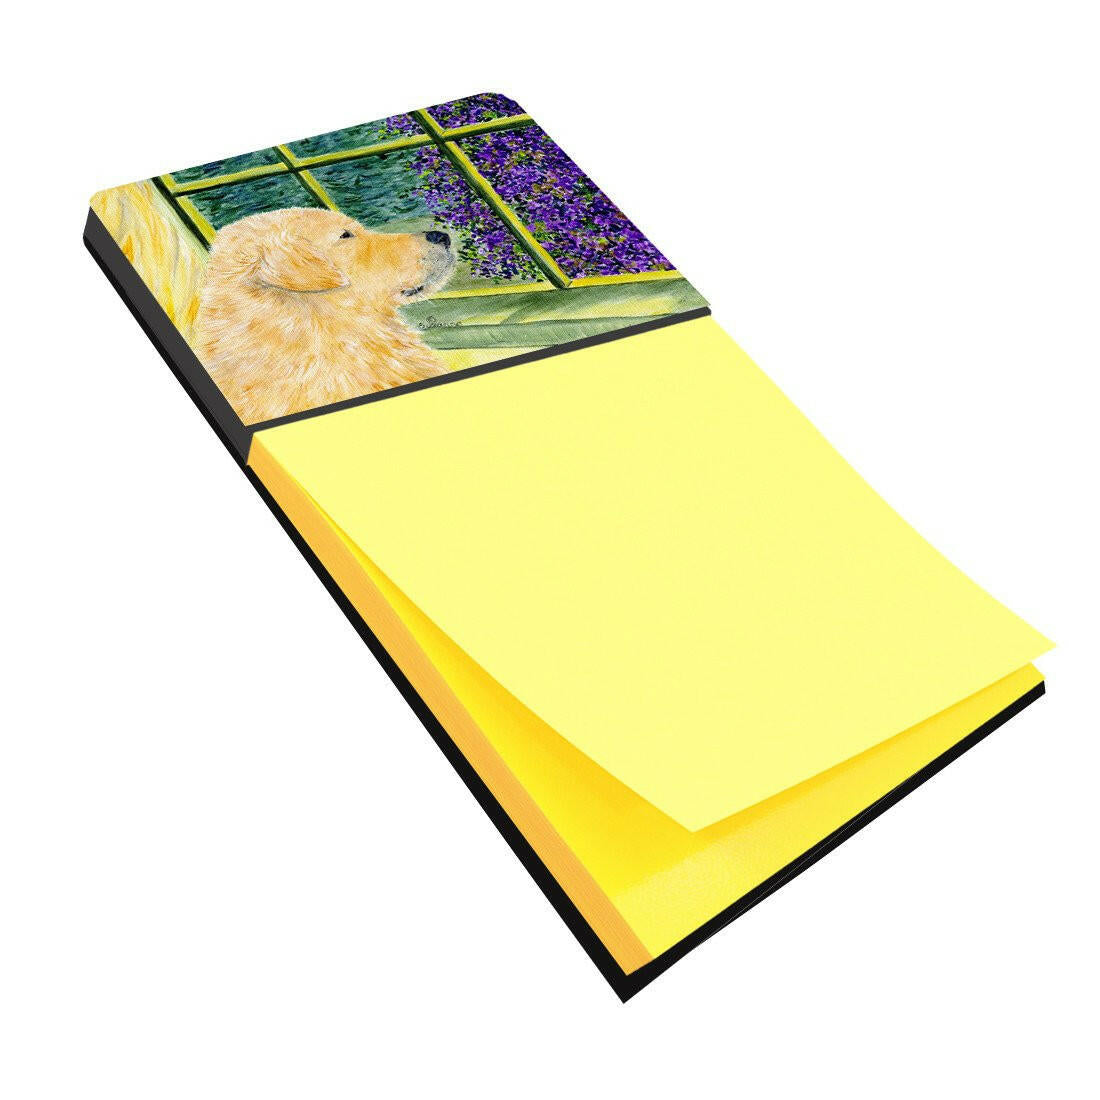 Golden Retriever Refiillable Sticky Note Holder or Postit Note Dispenser SS8680SN by Caroline's Treasures